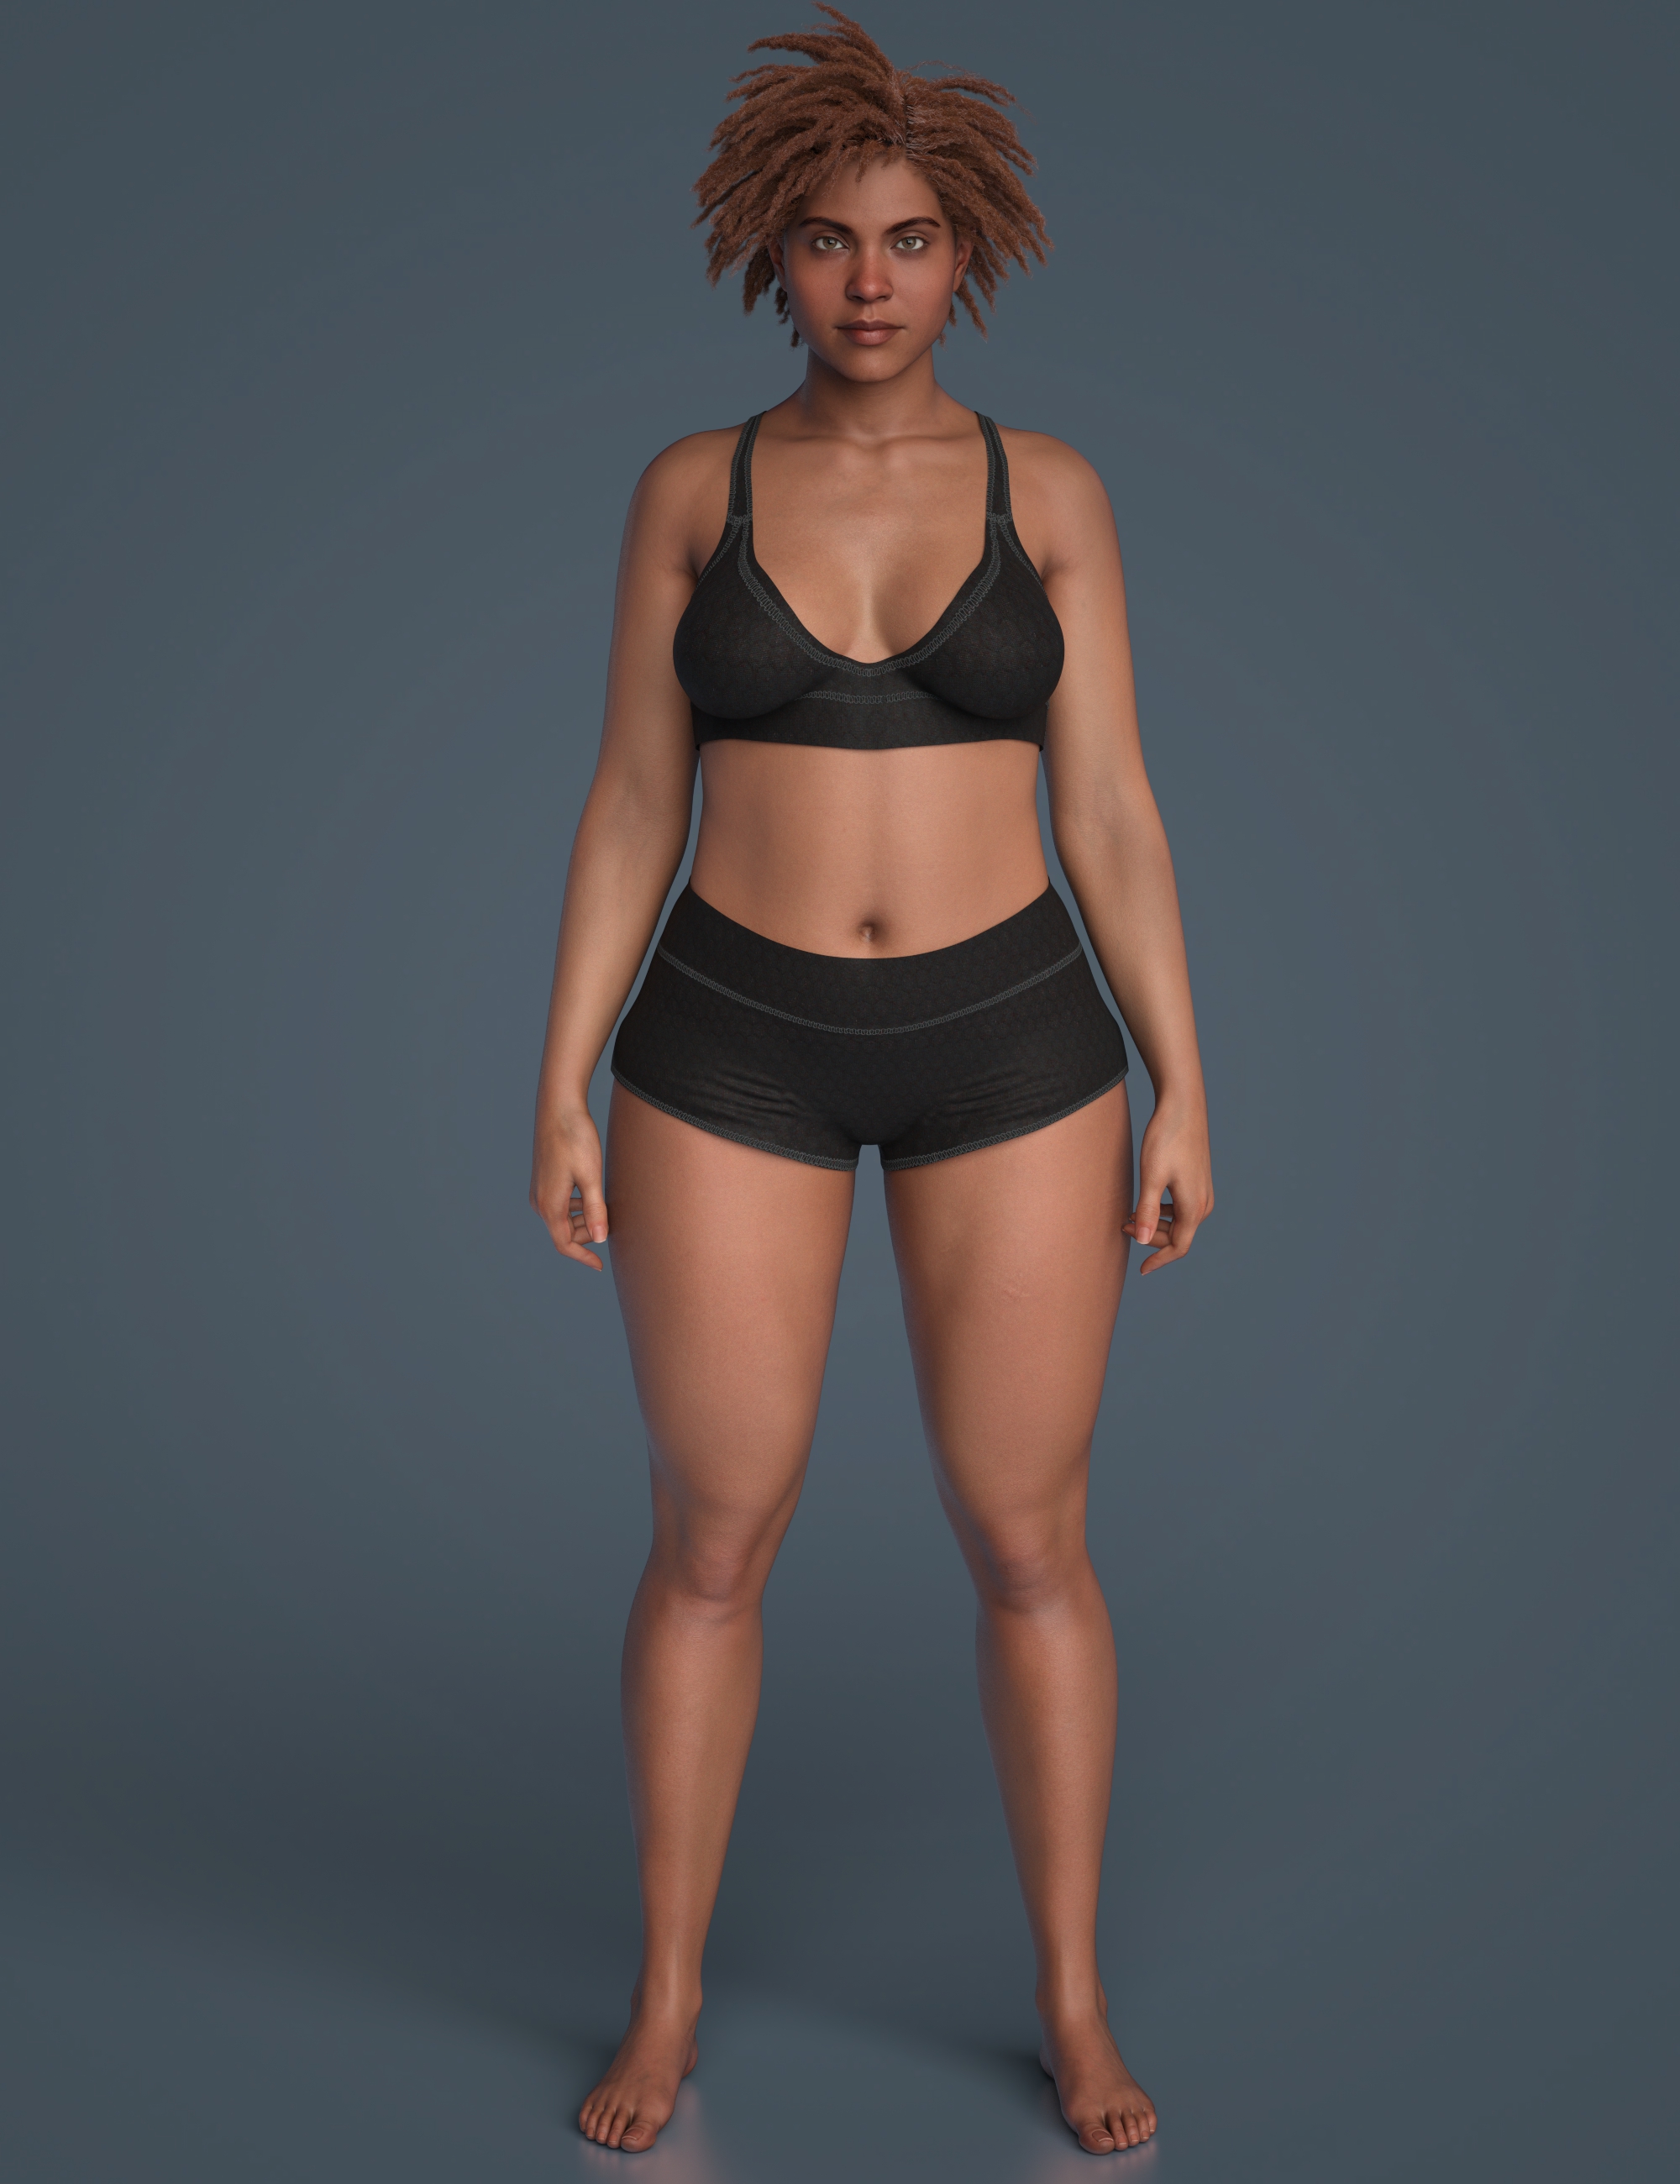 Zahara 9 Curvy Shape Add-On by: , 3D Models by Daz 3D